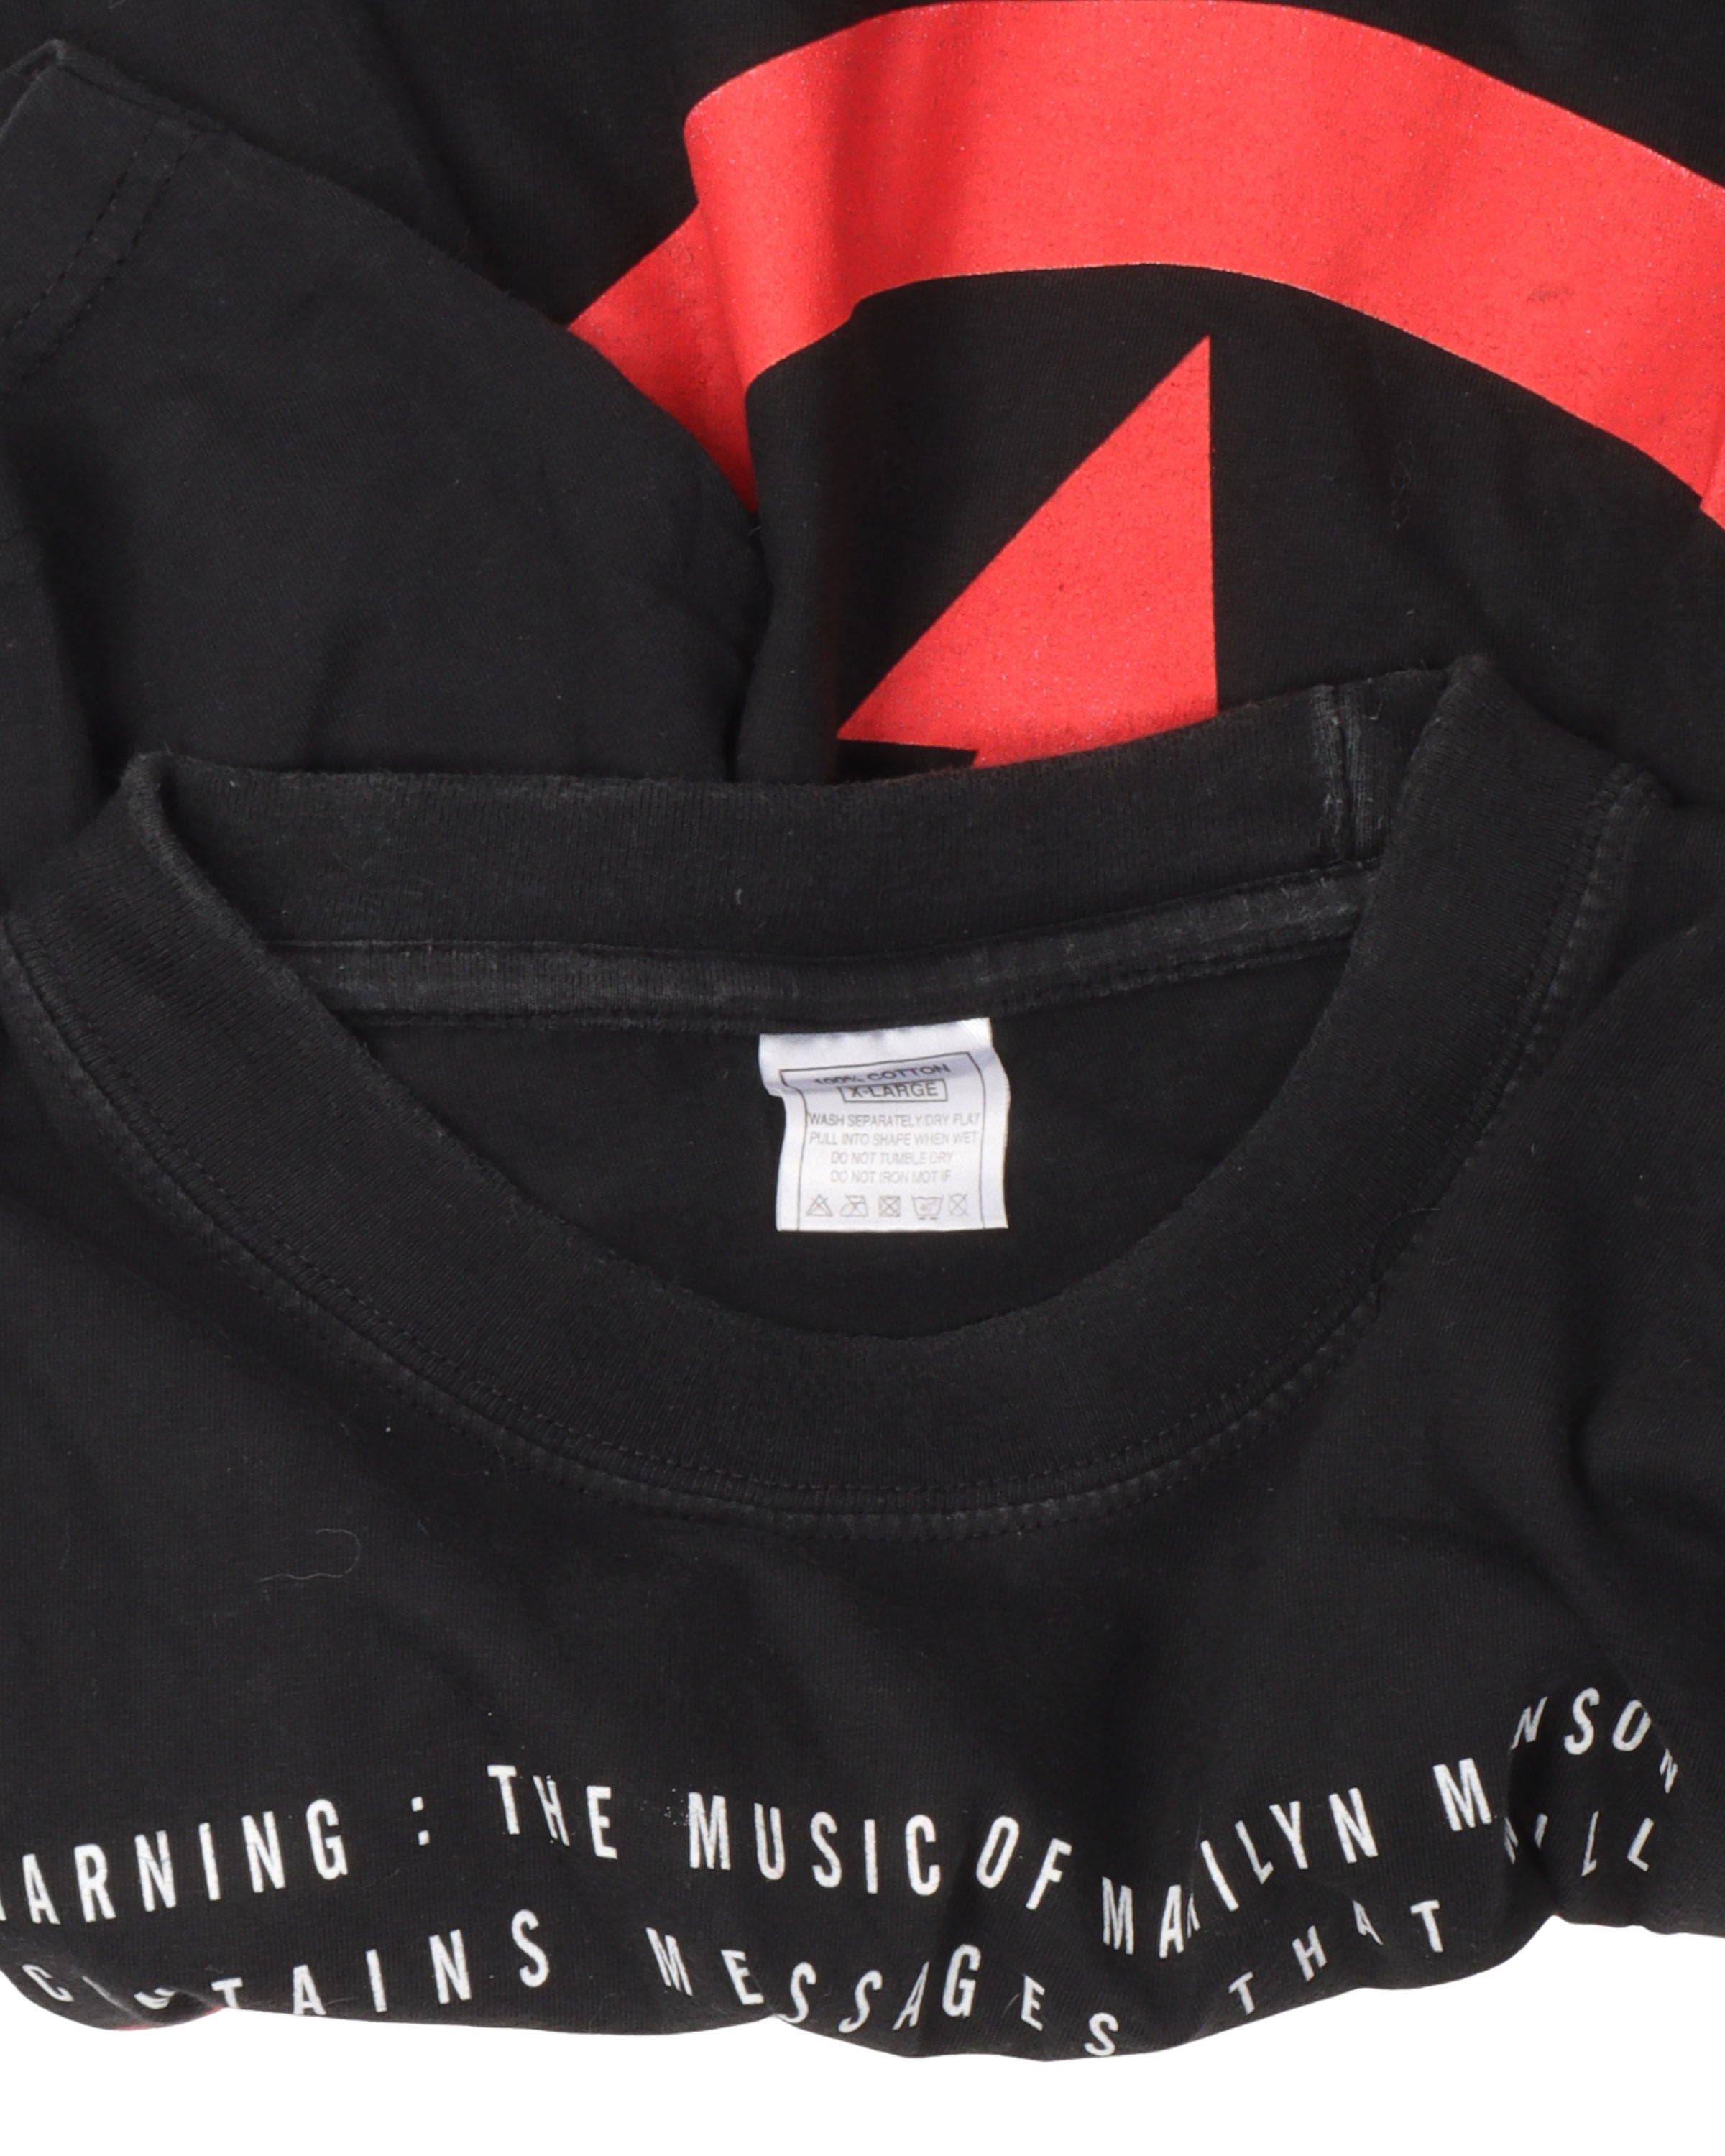 Marilyn Manson Kill God T-Shirt